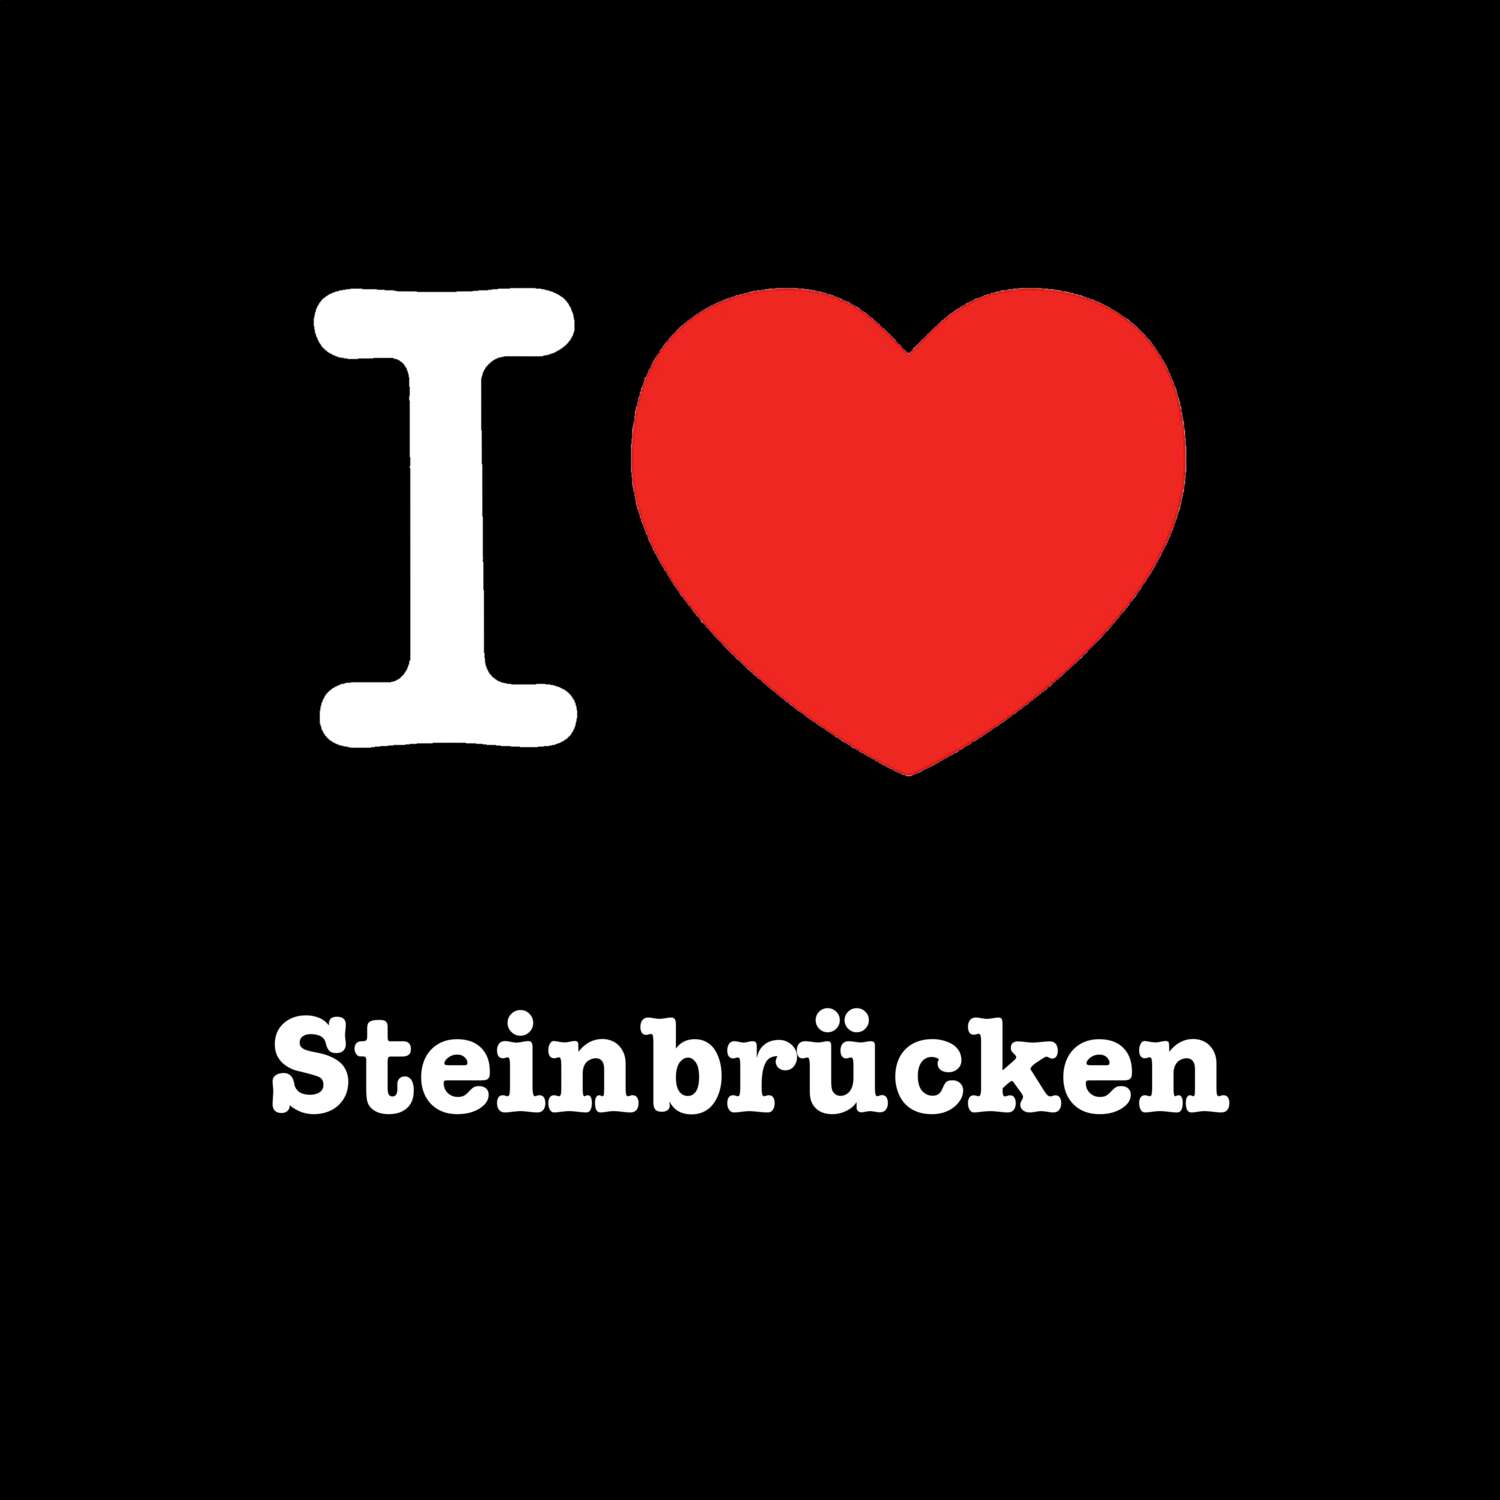 Steinbrücken T-Shirt »I love«